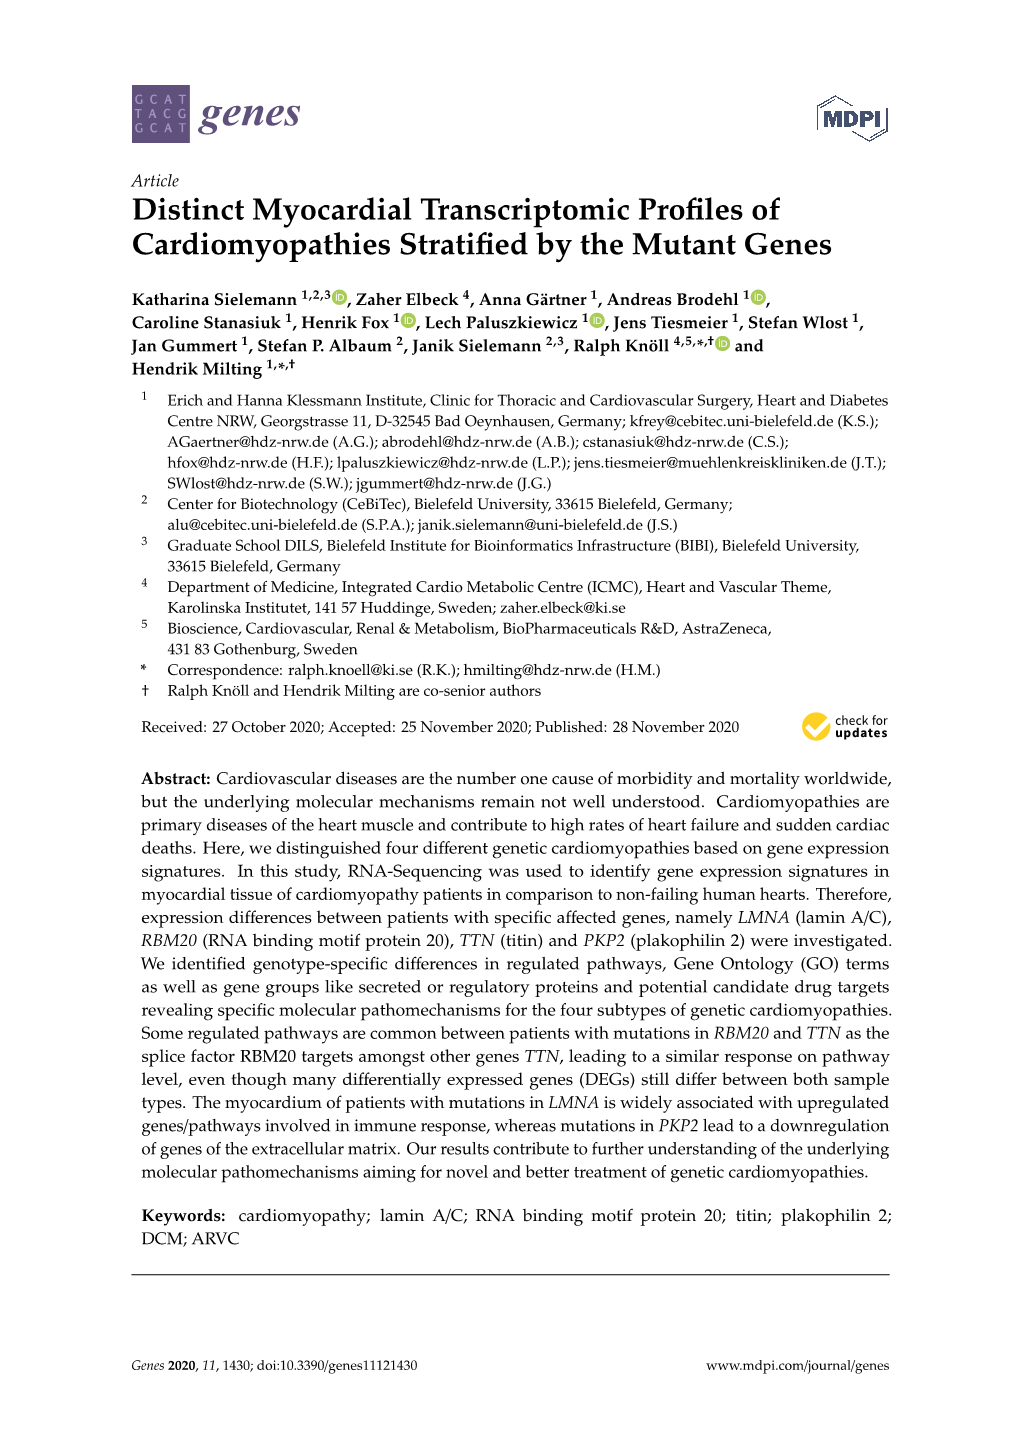 Distinct Myocardial Transcriptomic Profiles of Cardiomyopathies